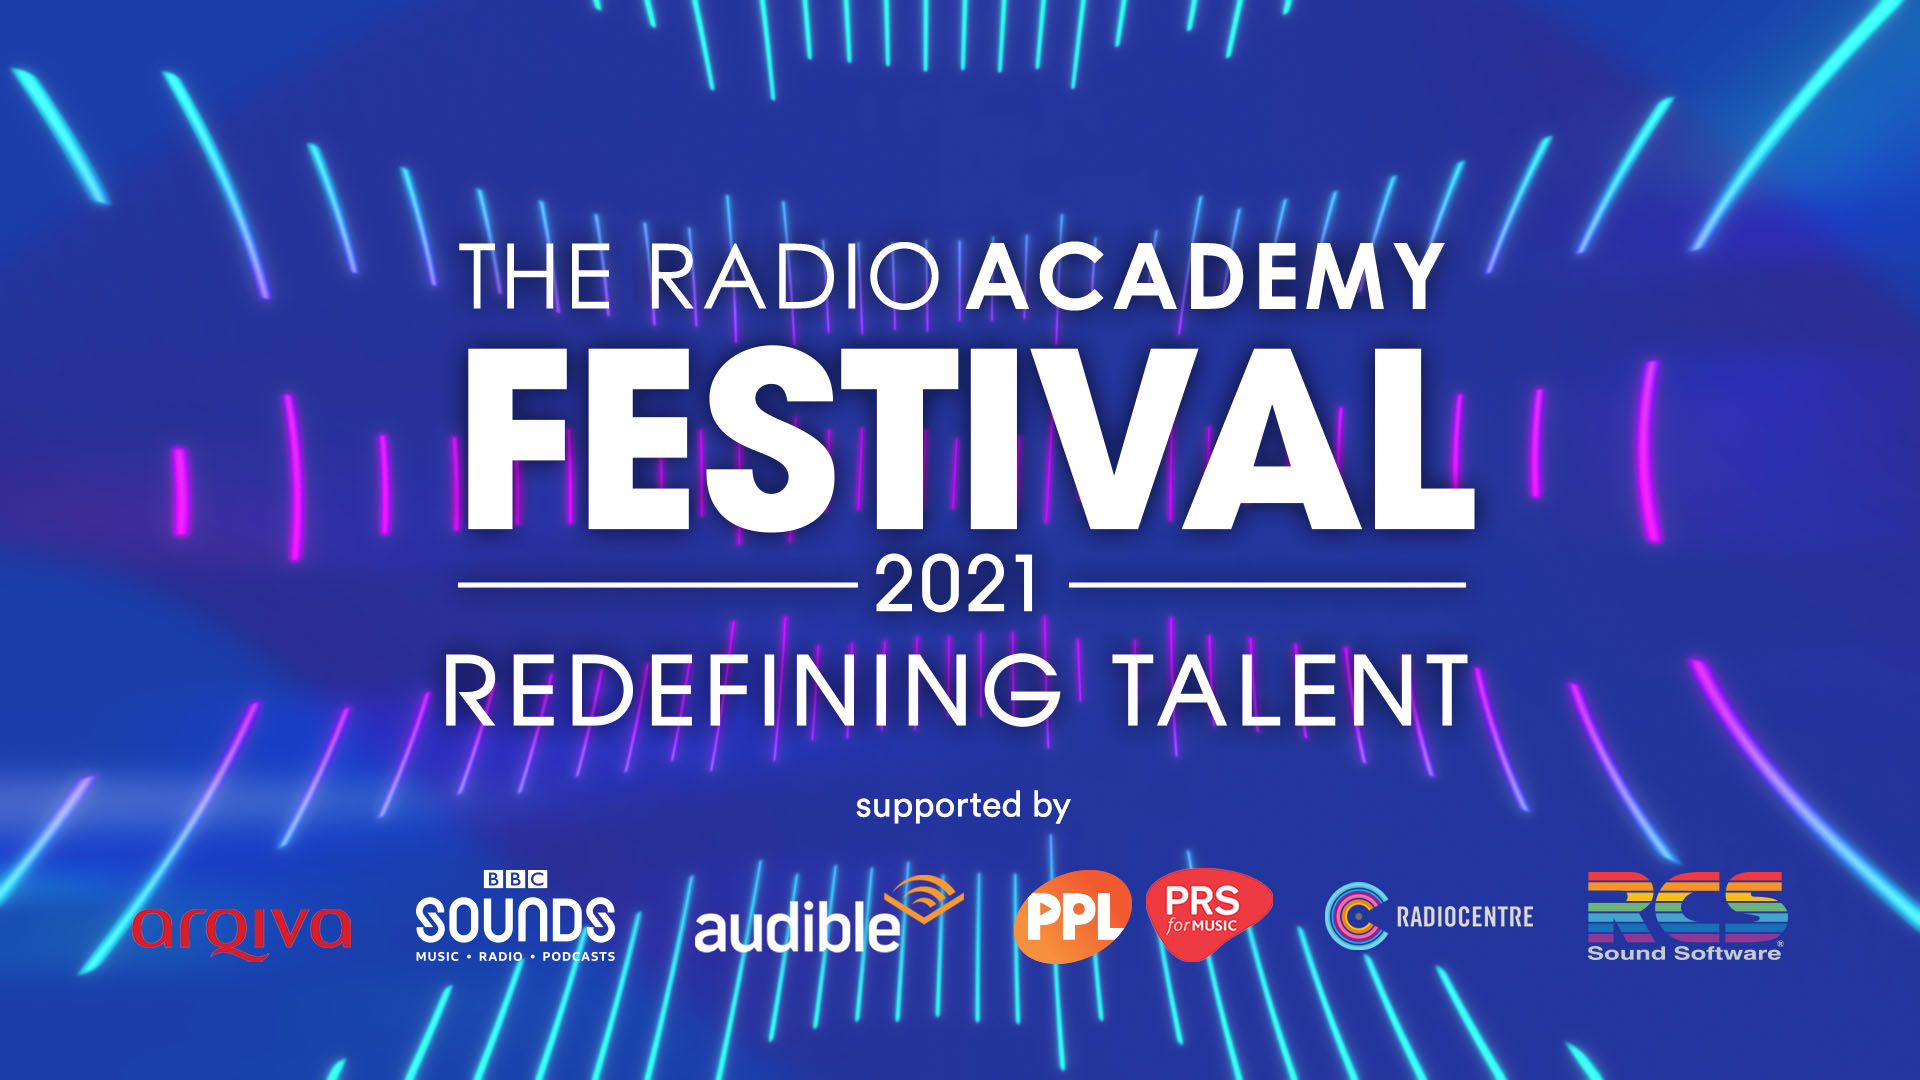 The Radio Academy Festival 2021 - Logo Subtitle With Sponsor